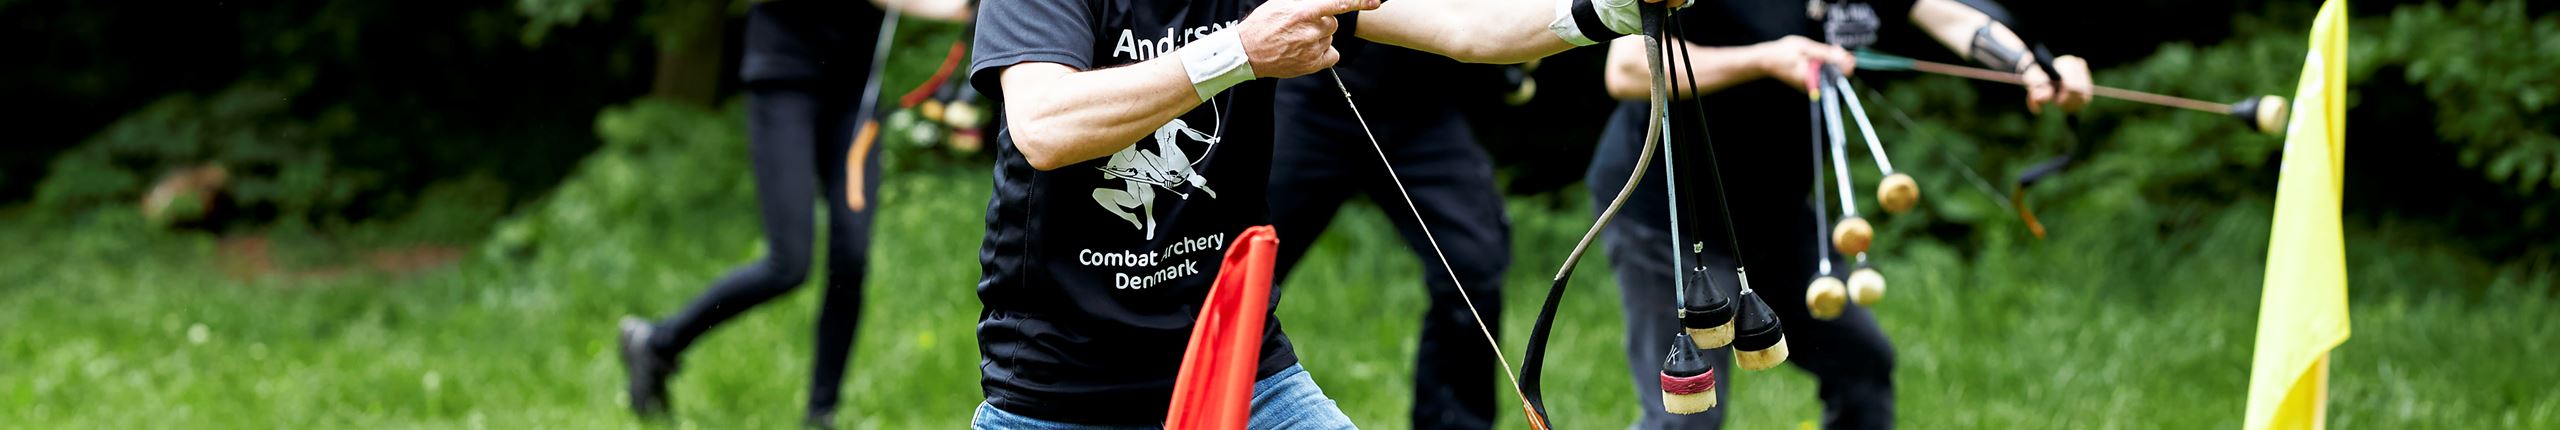 Combat archery, foto sektionsside - Bo Nymann.JPG